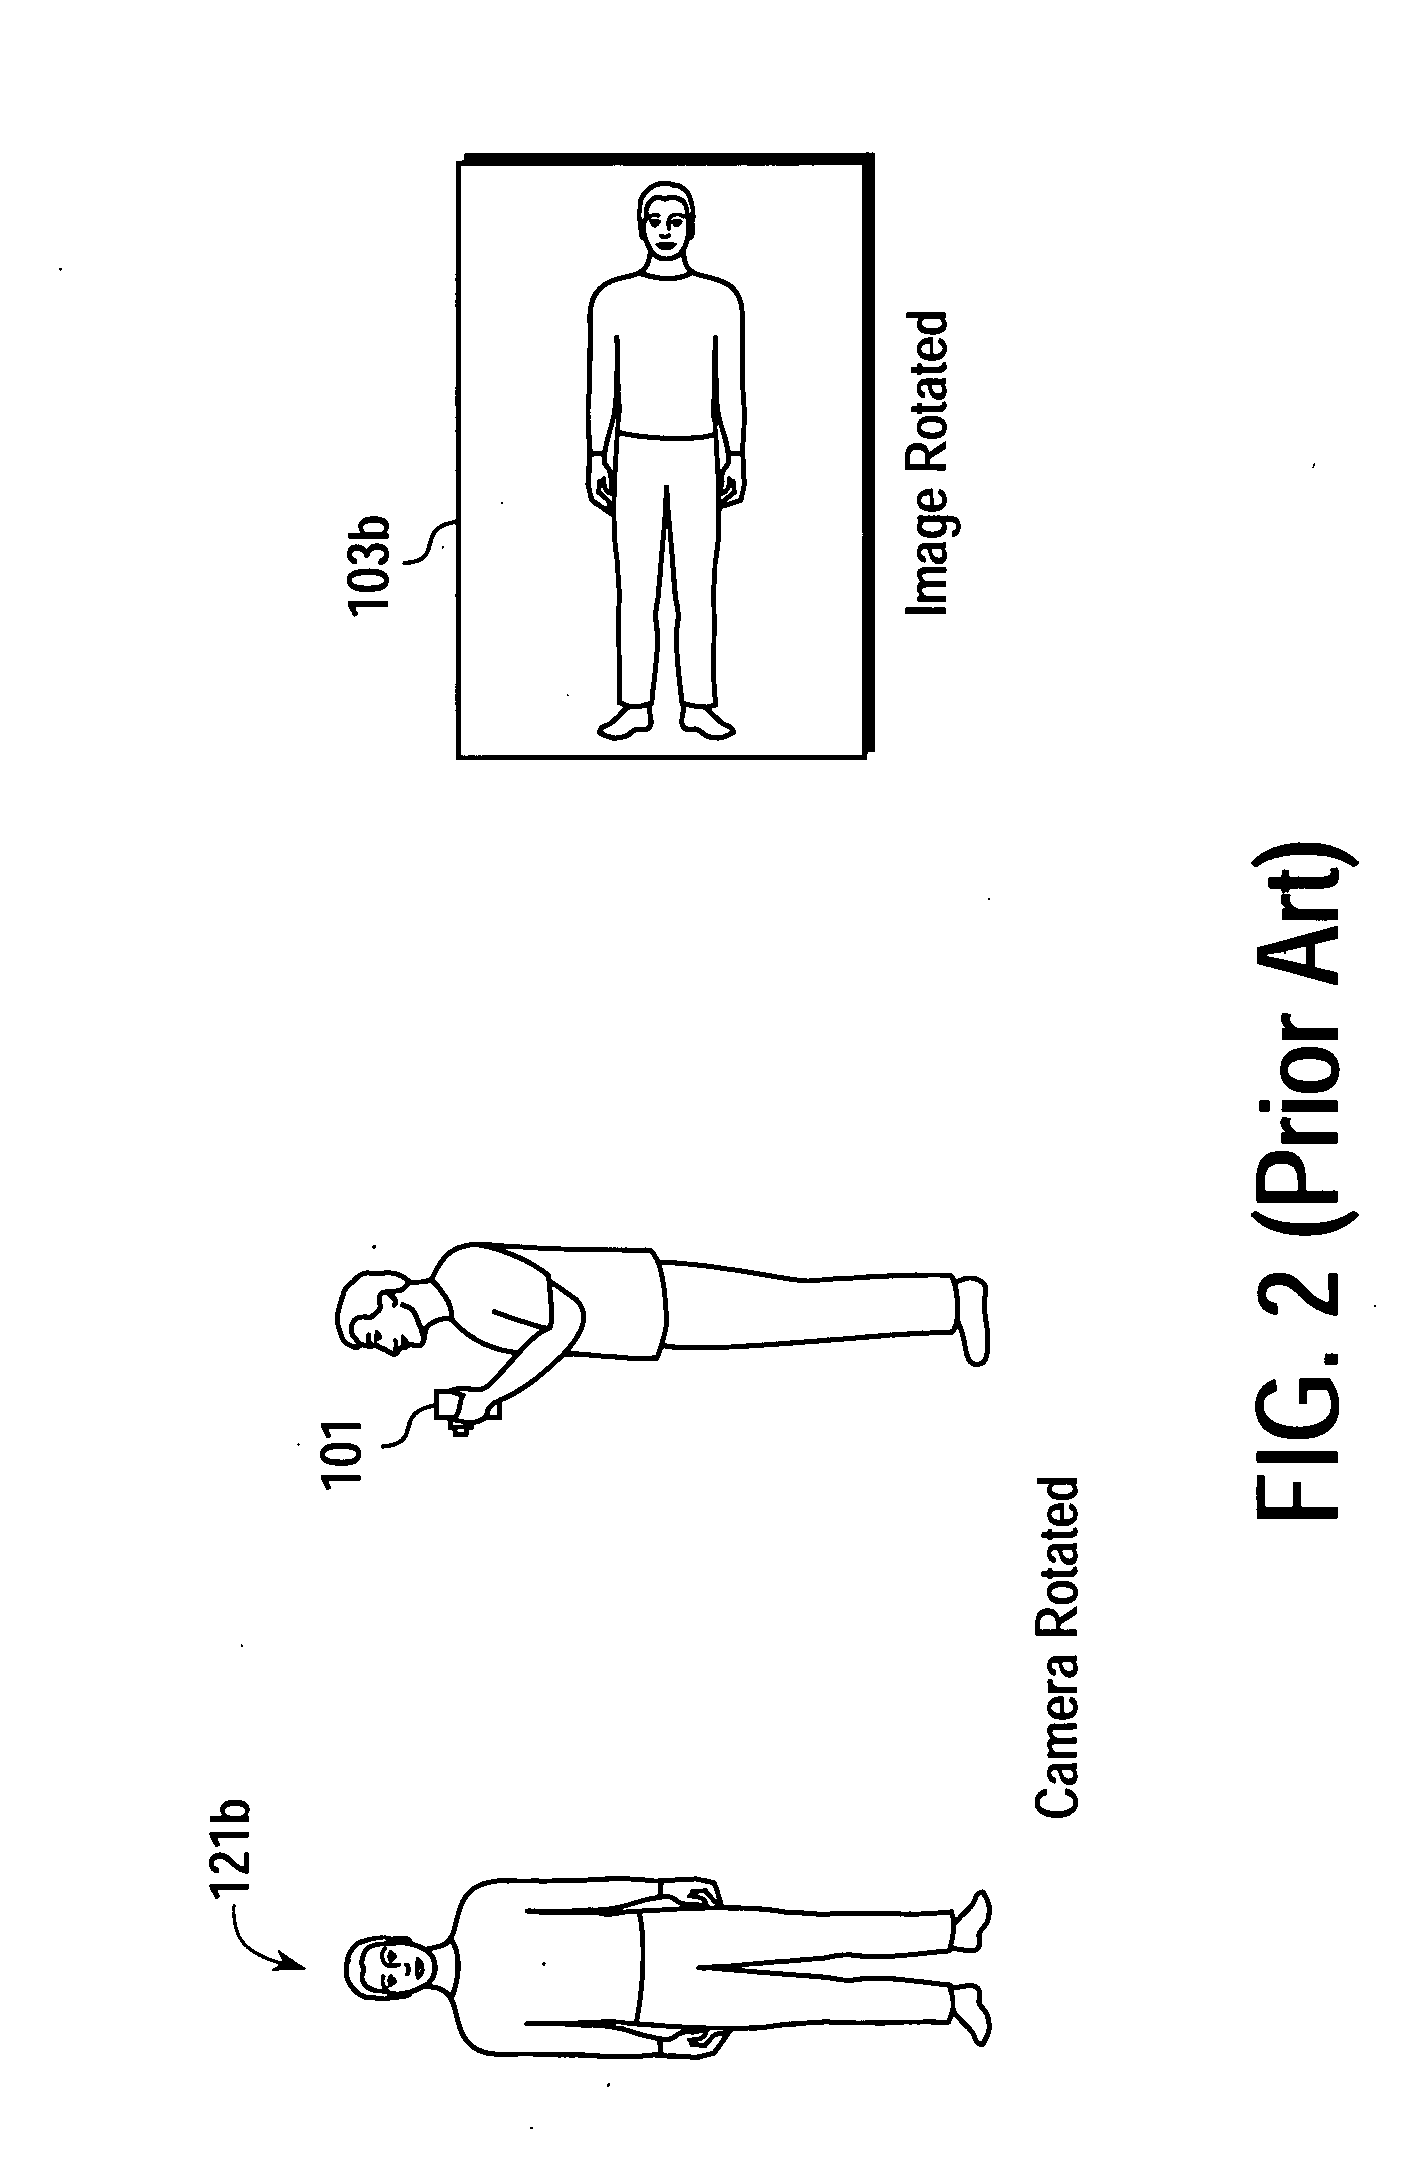 Image orientation apparatus and method